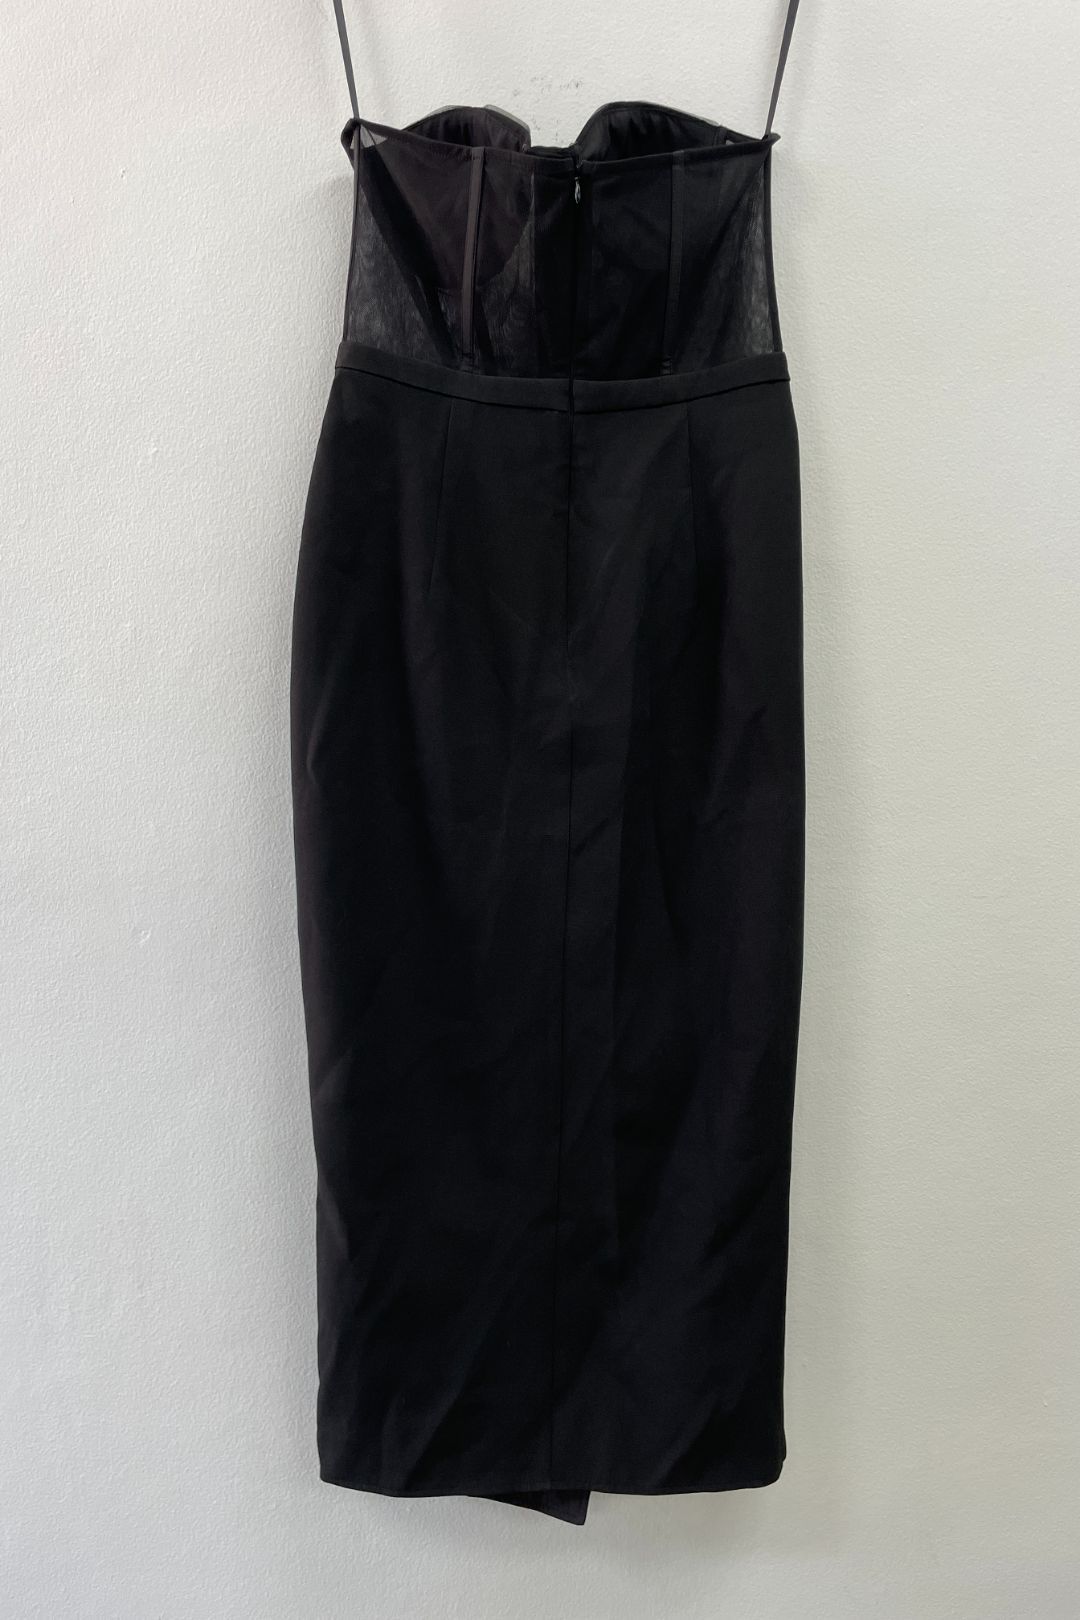 Elle Zeitoune	Strapless Black Bustier Midi Dress